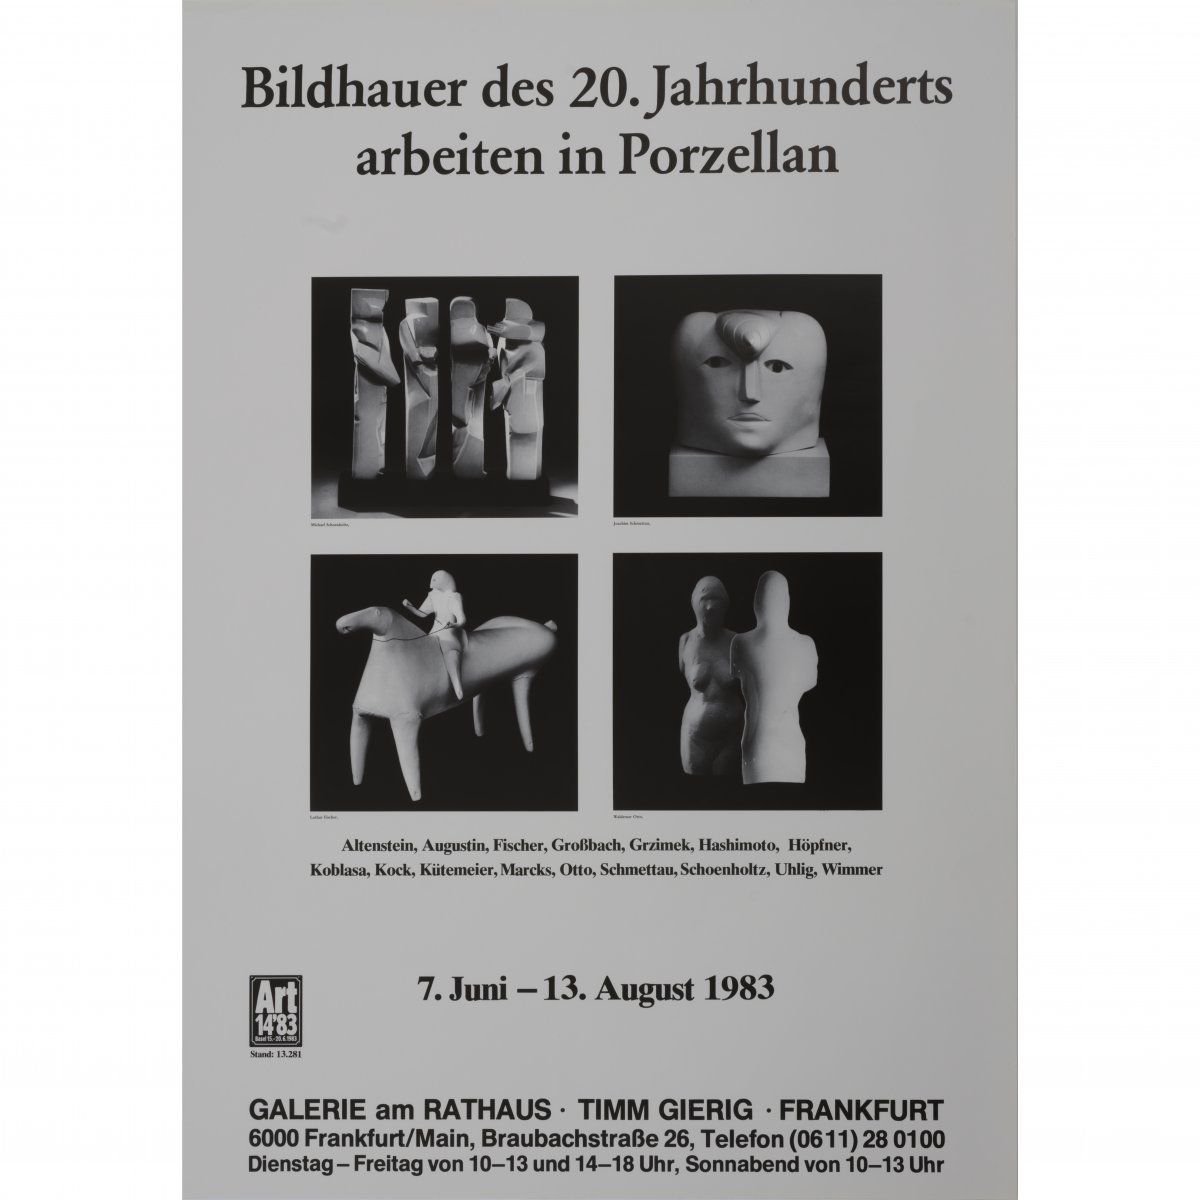 Null 迈克尔-肖恩霍尔茨（1937年杜伊斯堡-2019年柏林），"Vier Figuren "与草图 "Four Figures"，1981/1982，四个&hellip;